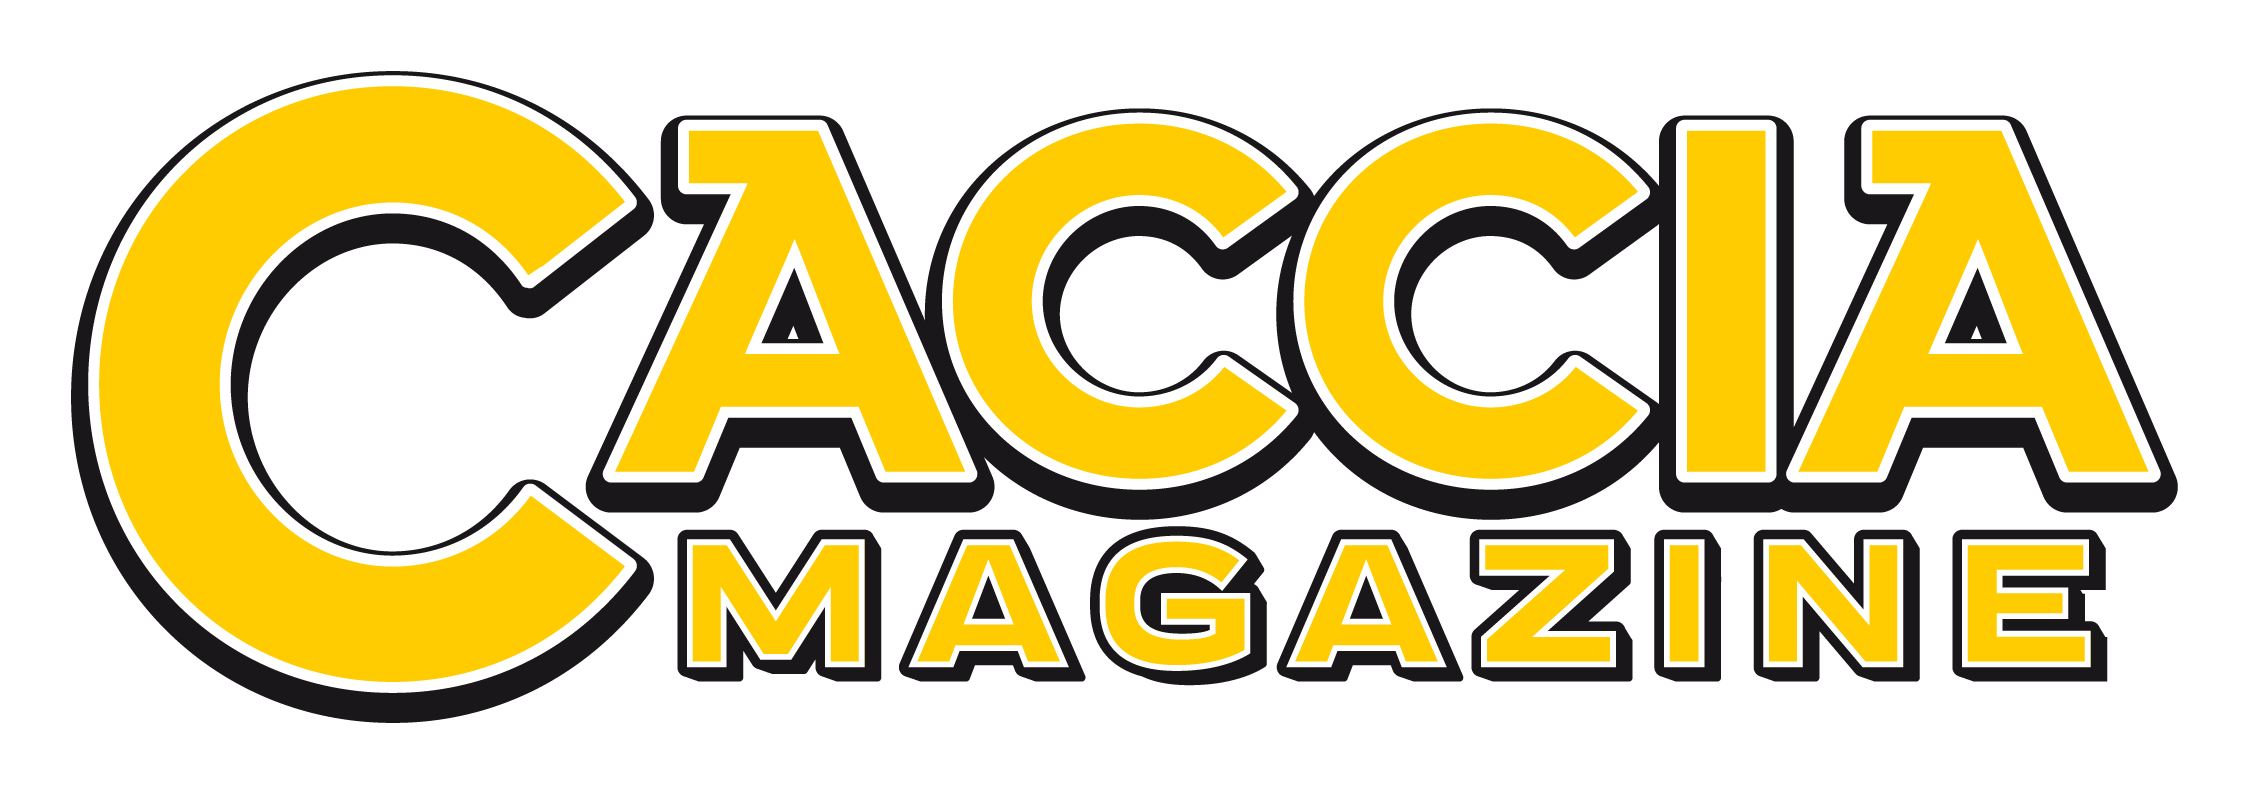 Caccia Magazine